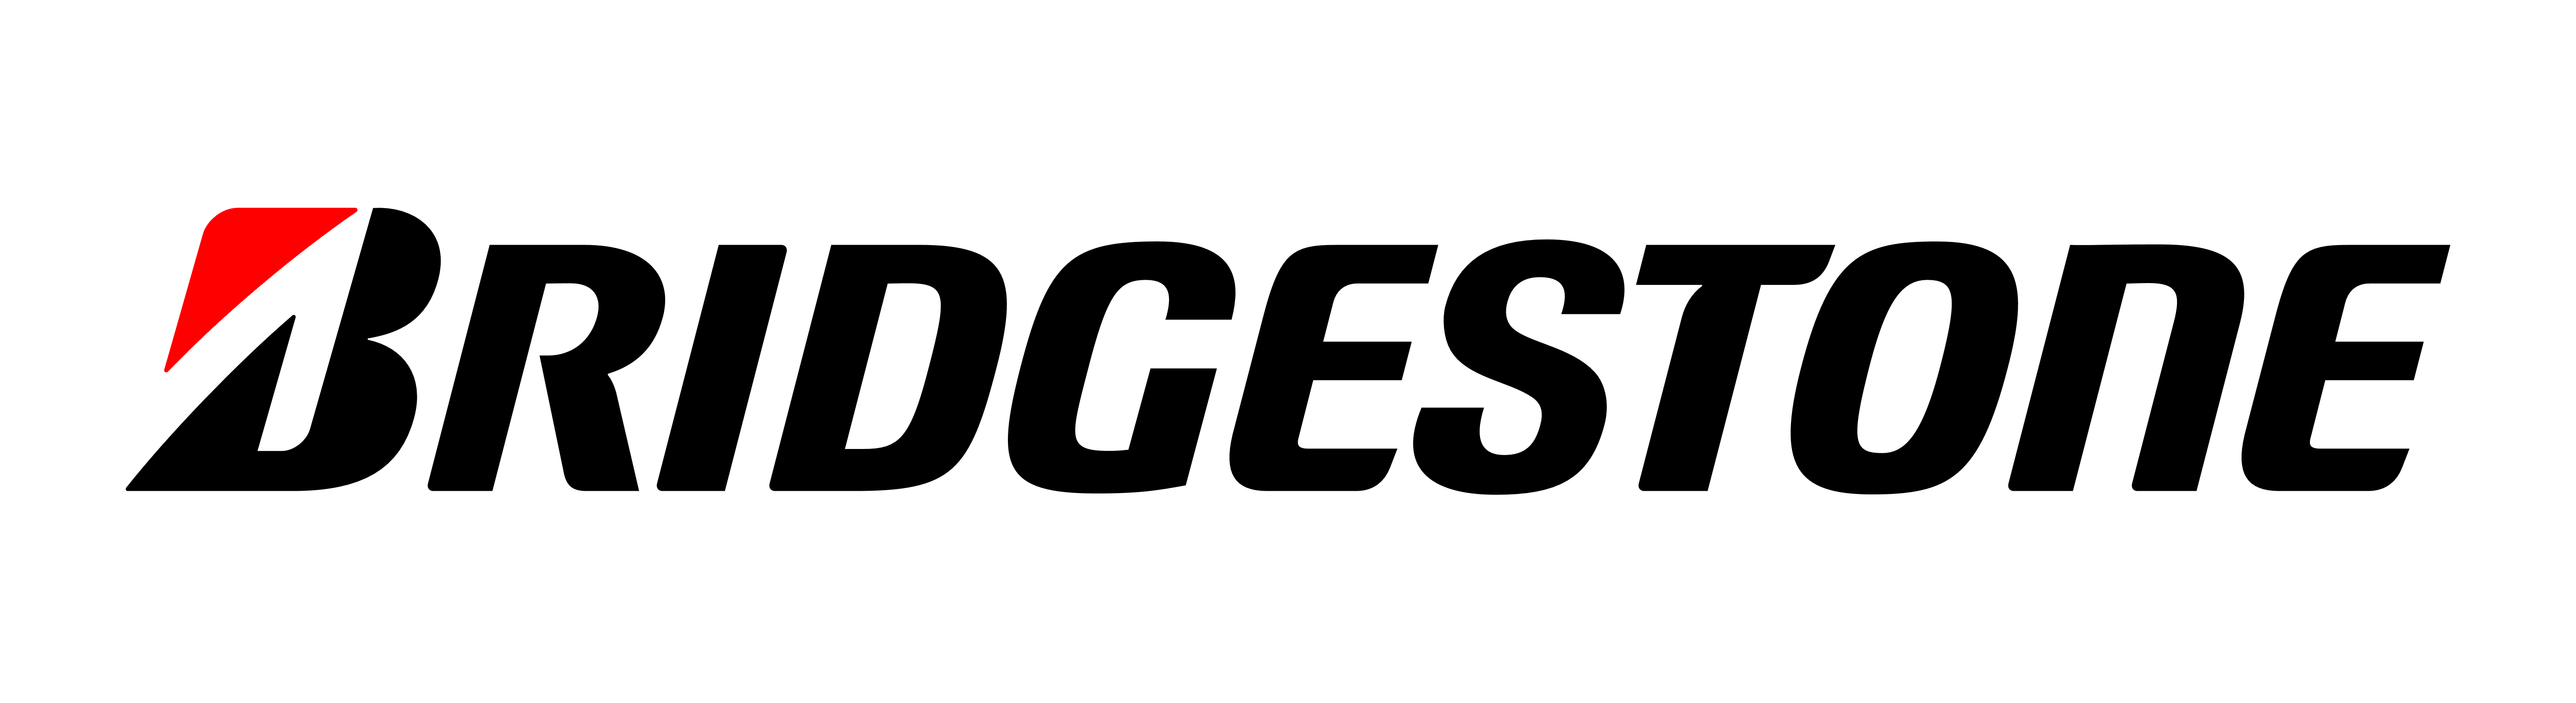 Bridgestone logo 5500x1500 1